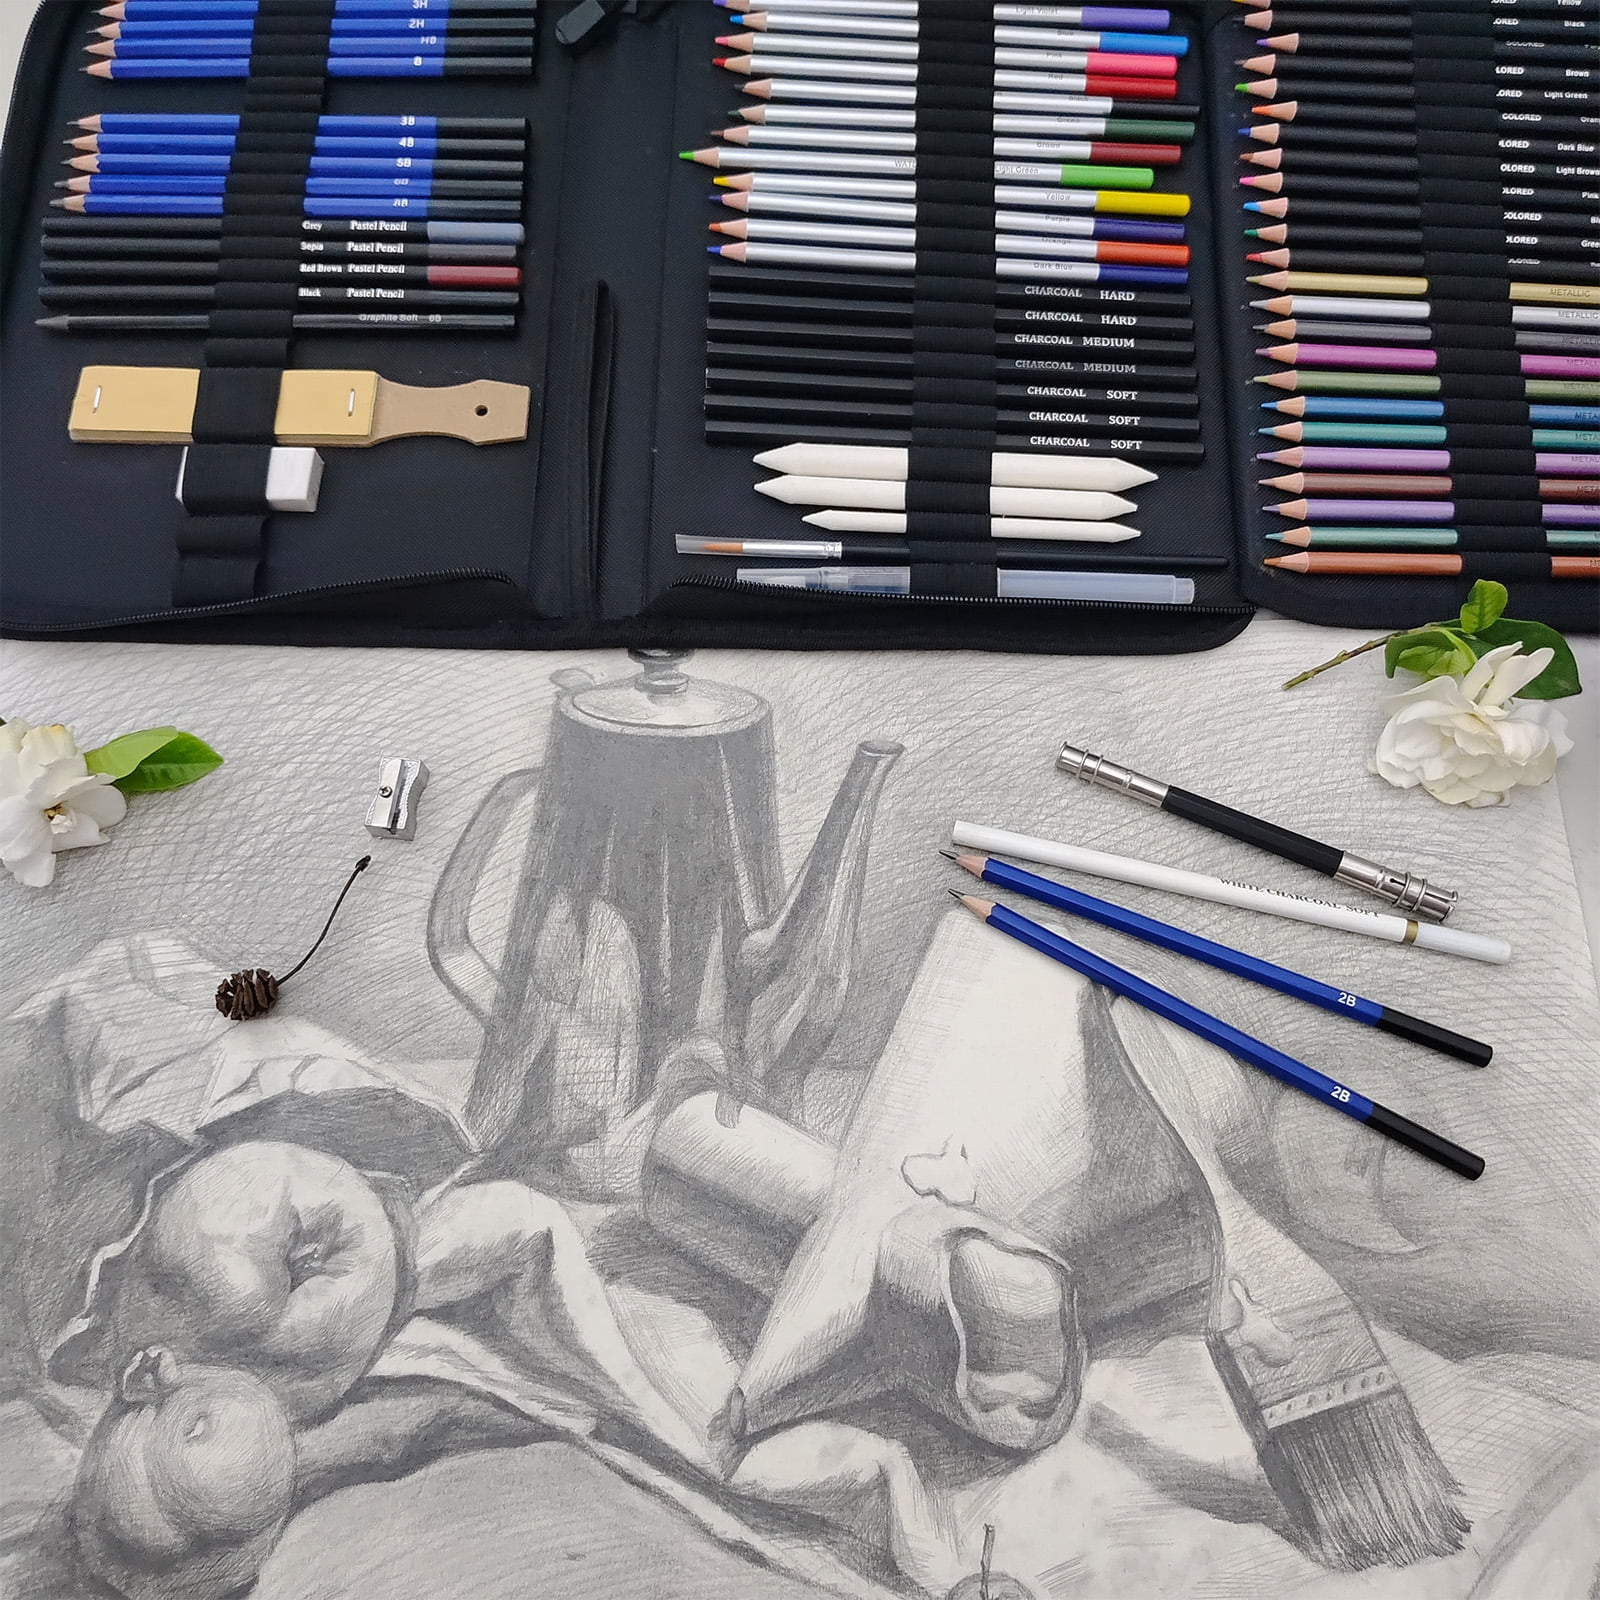 Art Supplies, 272 Pack Art Set Drawing Kit for Girls Boys Teens Artist —  CHIMIYA